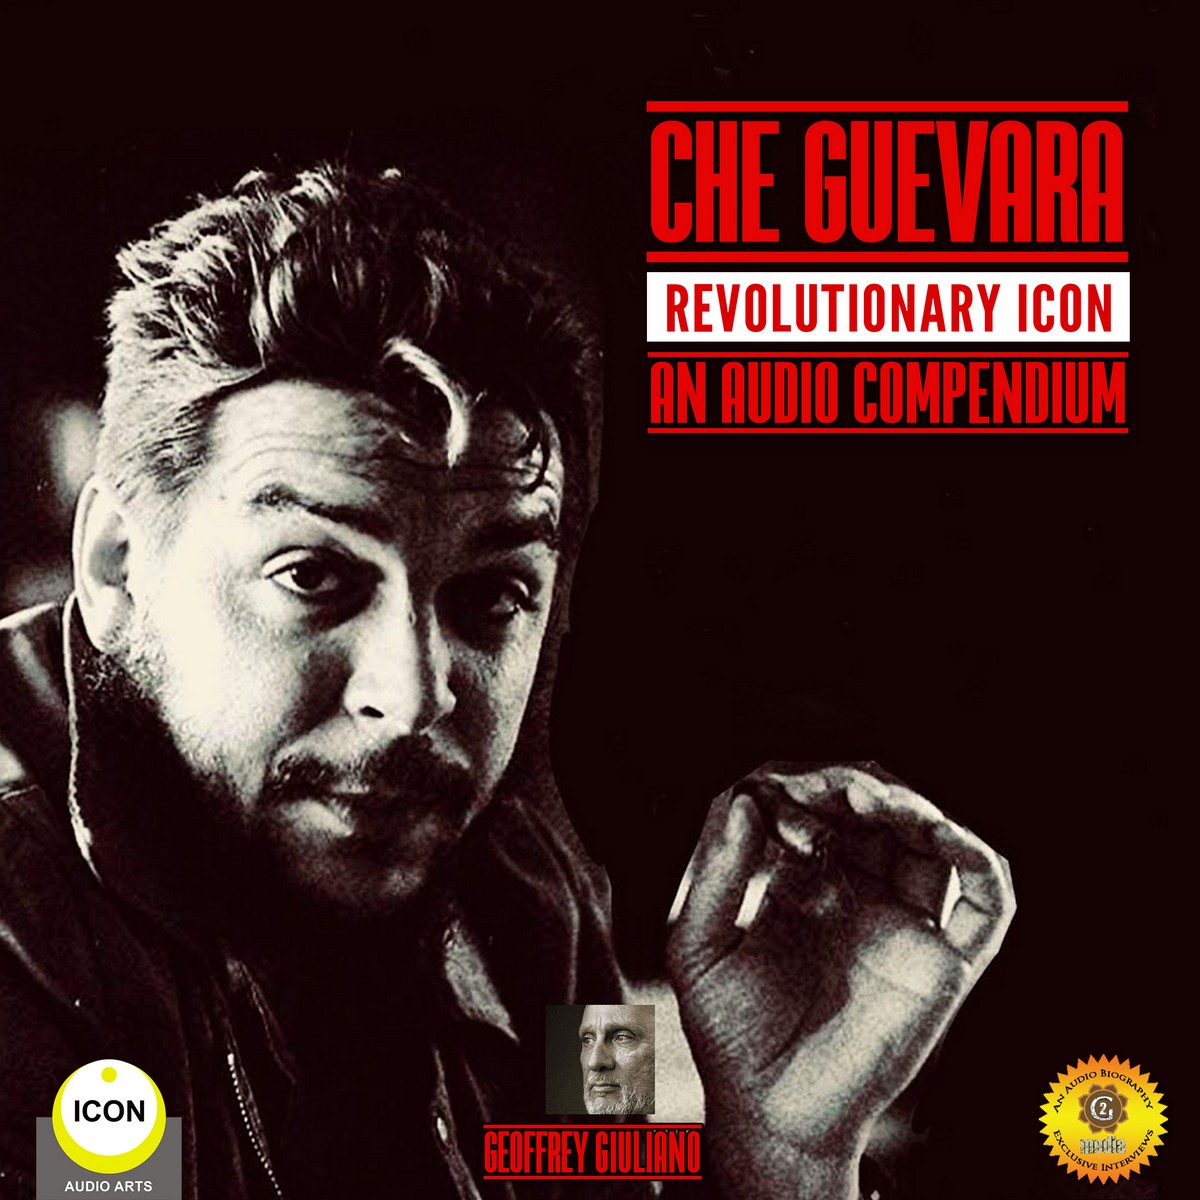 Che Guevara Revolutionary Icon – An Audio Compendium